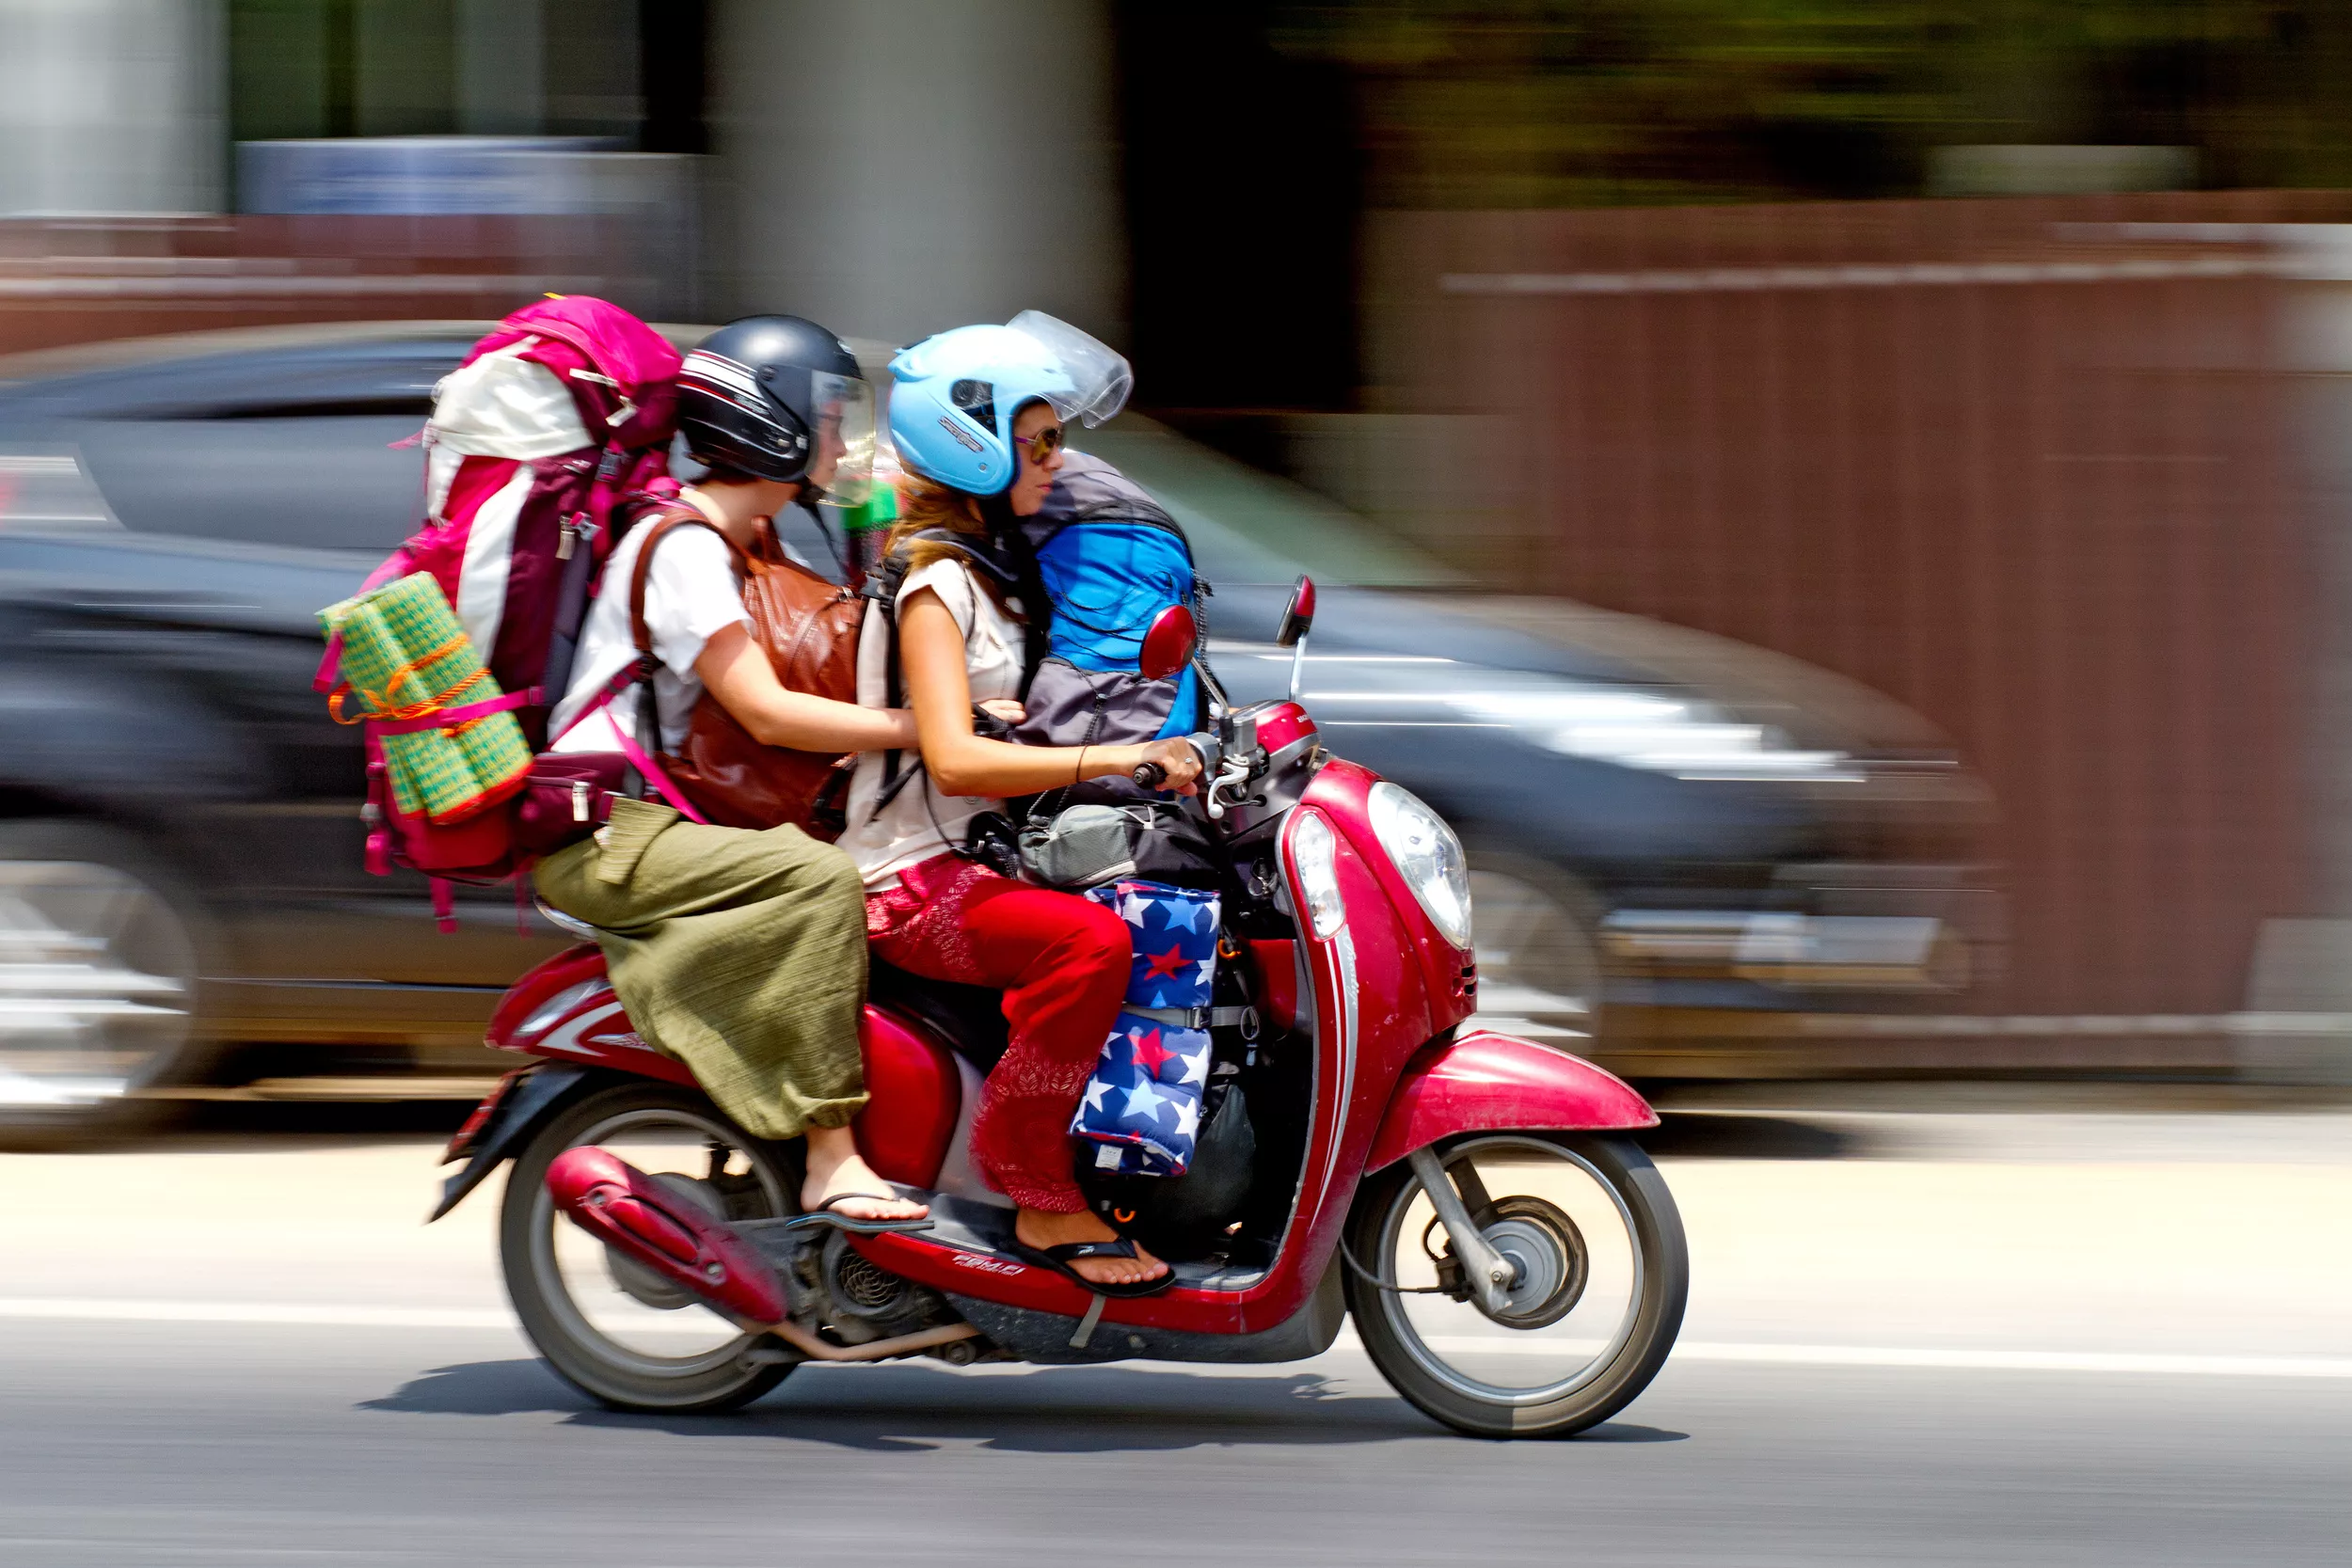 Big Bike Rental Bangkok in Thailand, Central Asia | Motorcycles - Rated 0.8